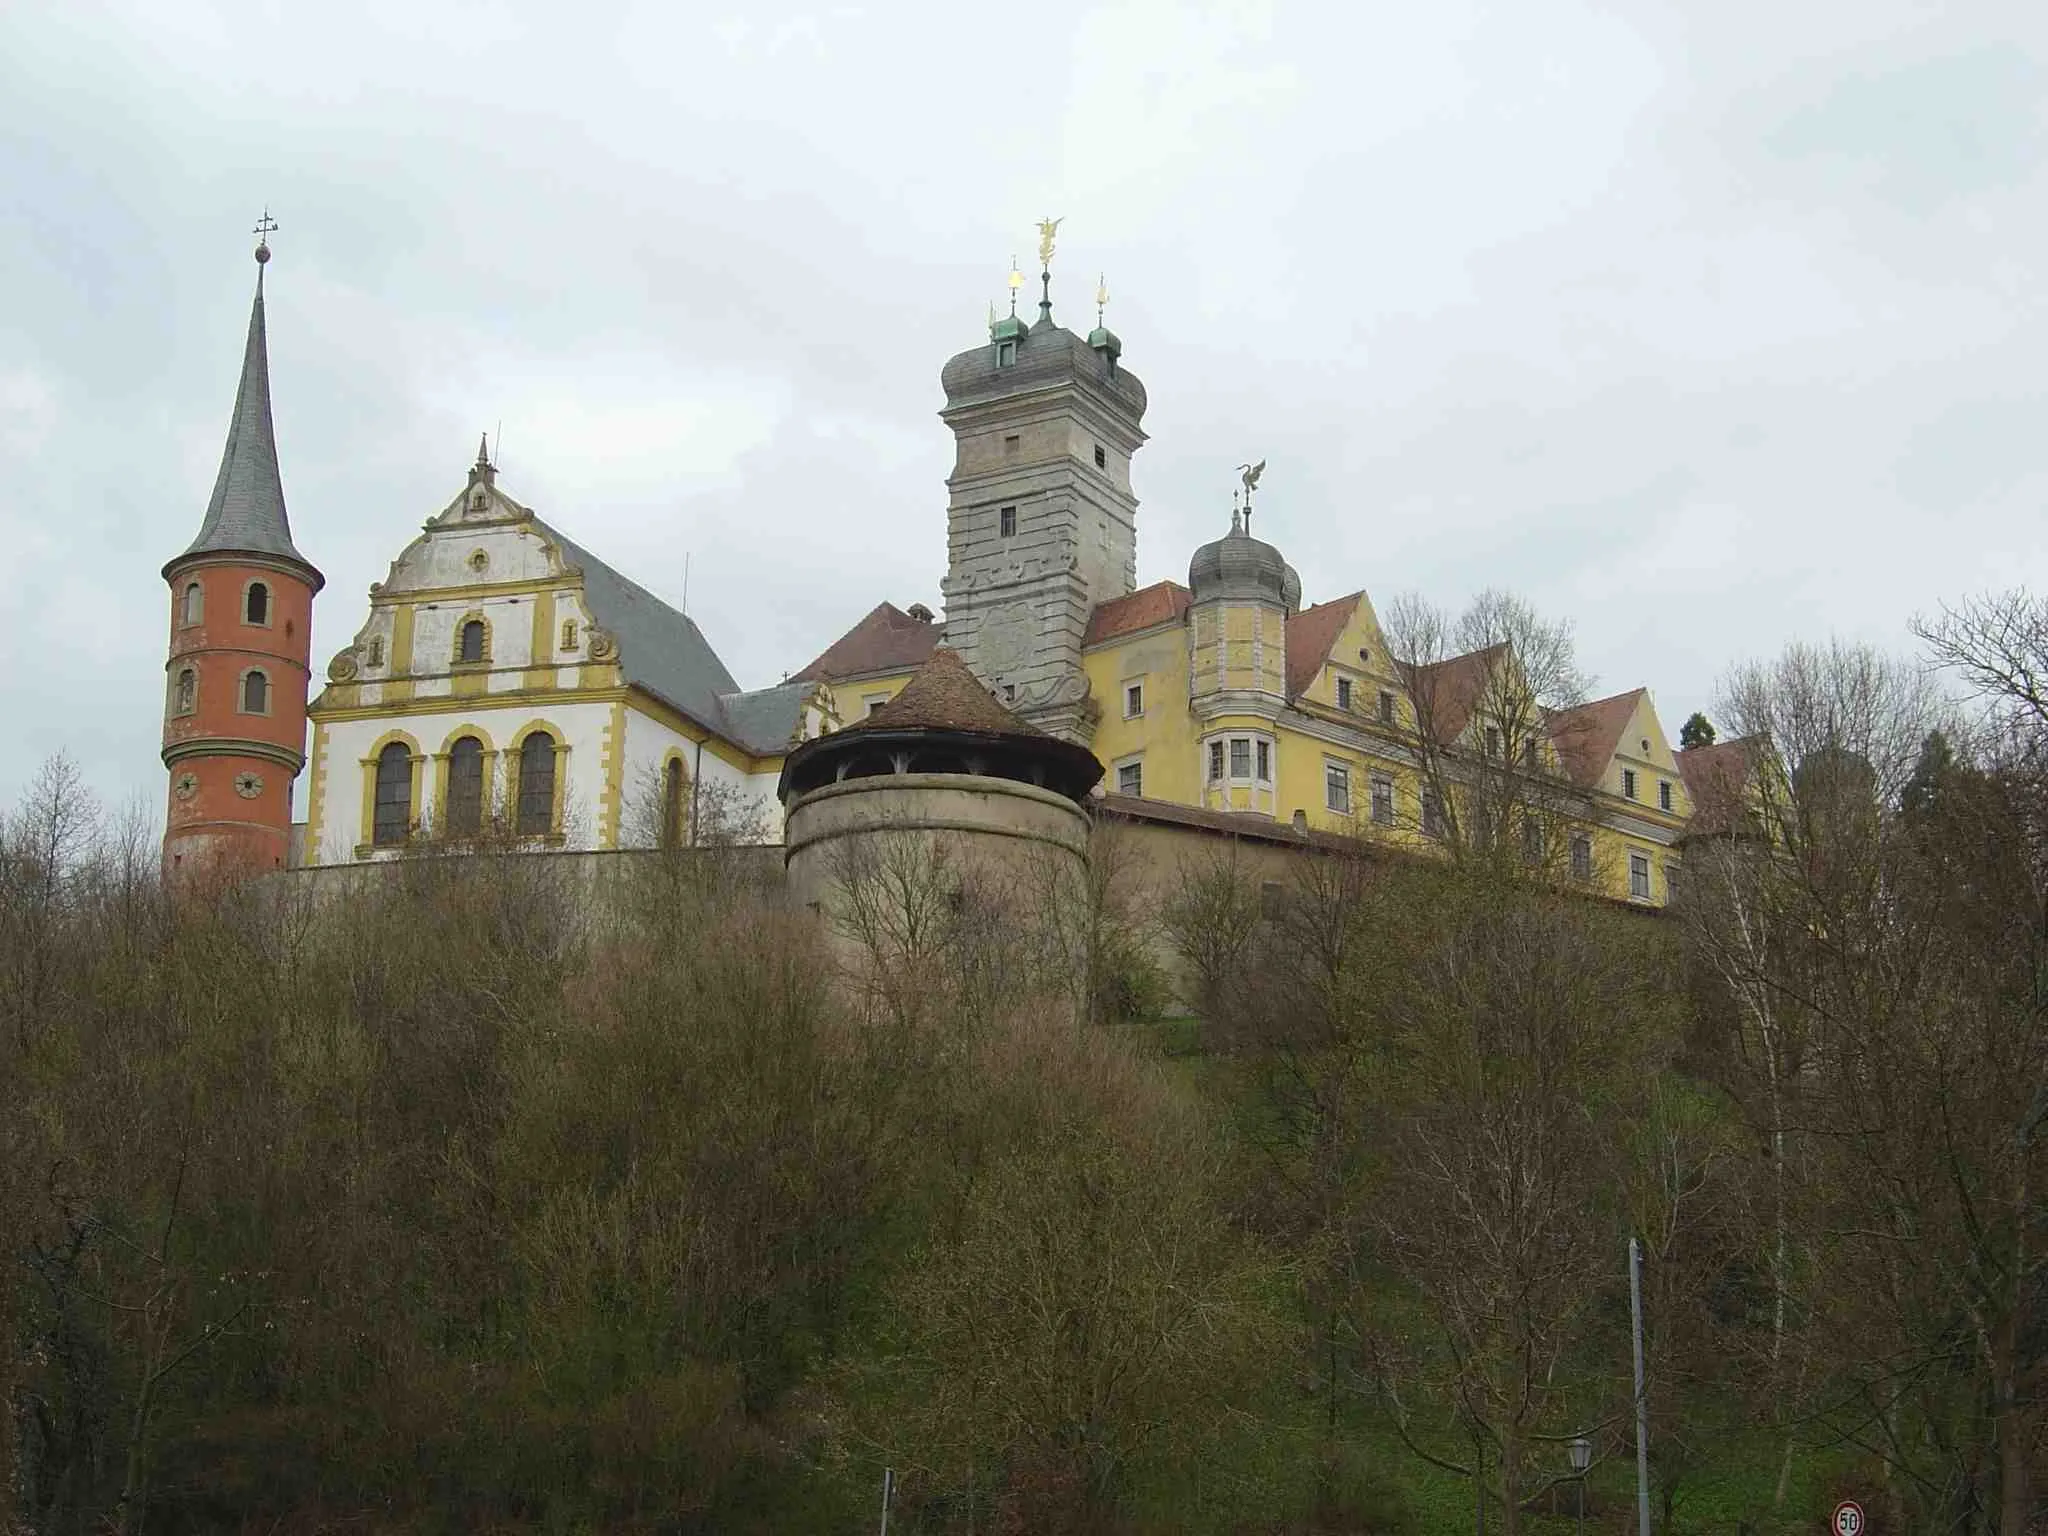 Photo showing: Beschreibung: Schloss Schwarzenberg Franken #1, Scheinfeld, April 2005
Quelle: selbst fotografiert, digital
Lizenz: das Bild stelle ich als Public Domain gemeinfrei zur Verfügung